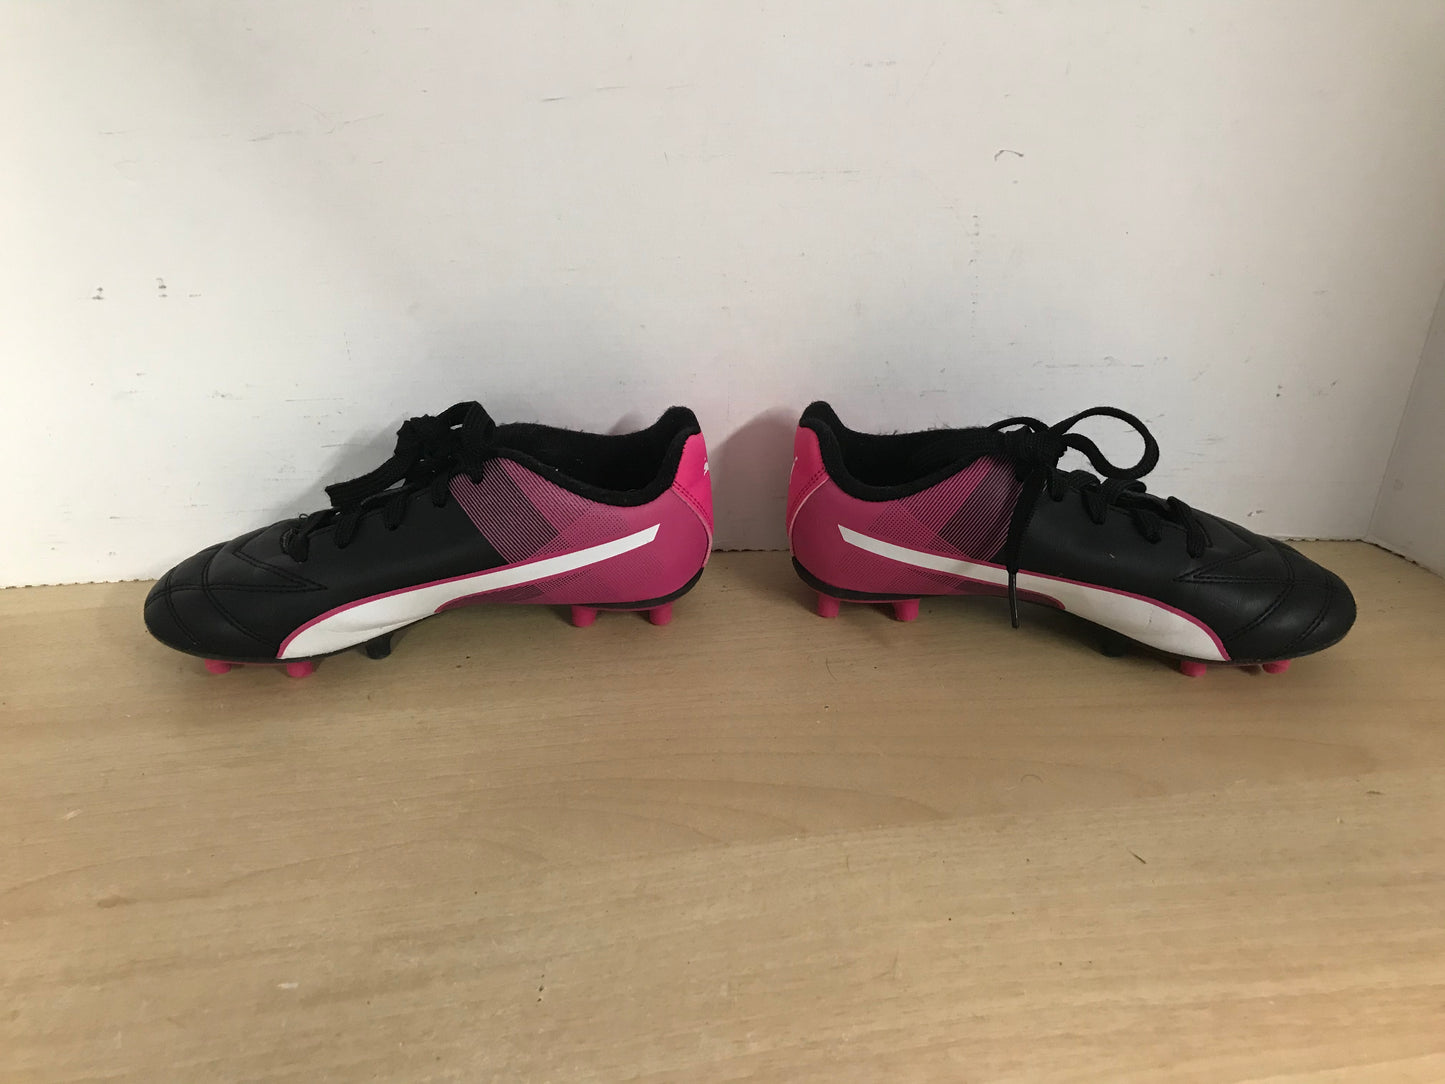 Soccer Shoes Cleats Child Size 1.5 Puma Pink White Black Excellent